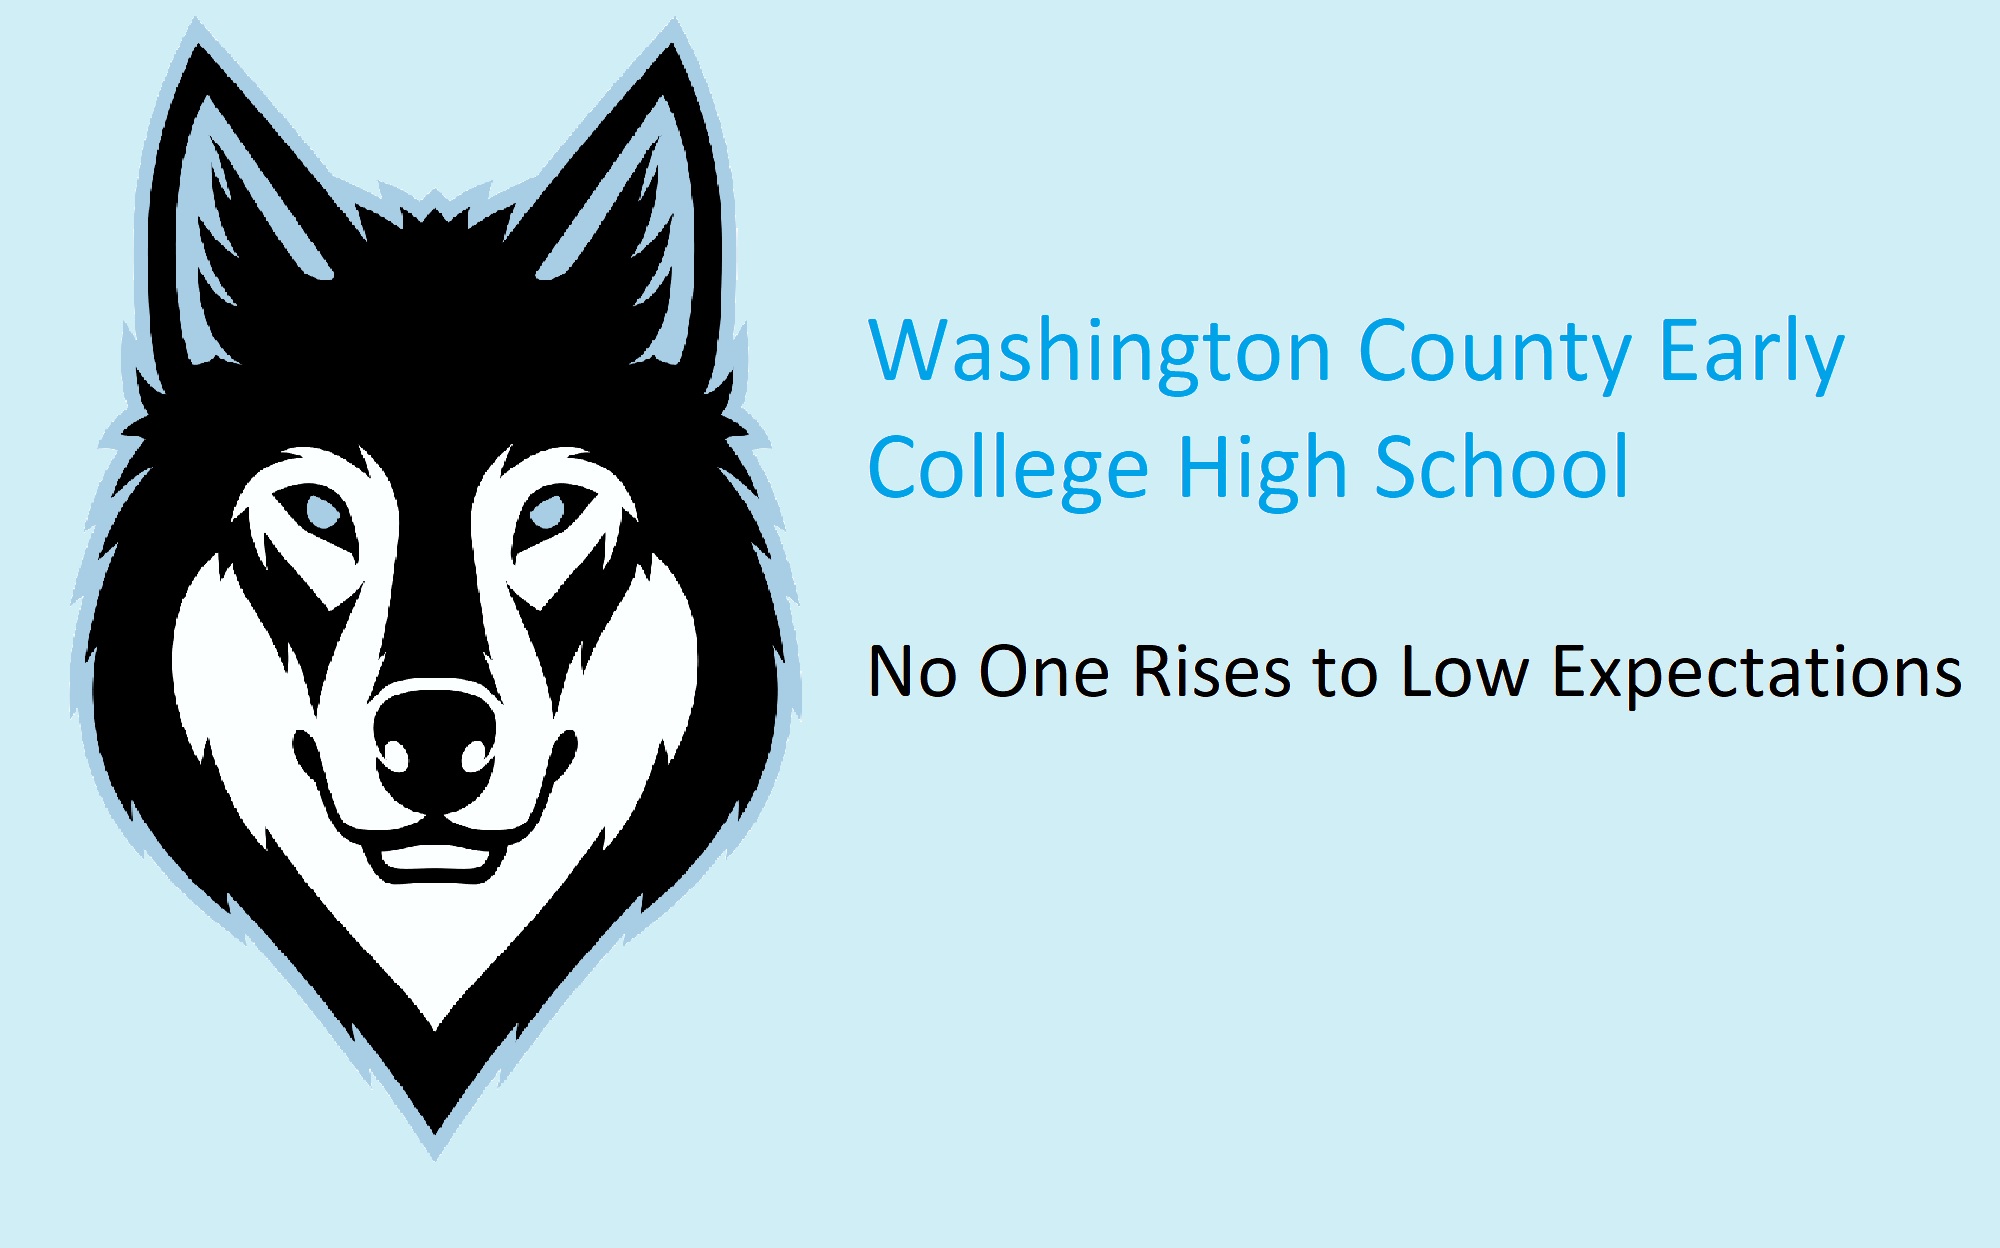 Washington County Early College High School